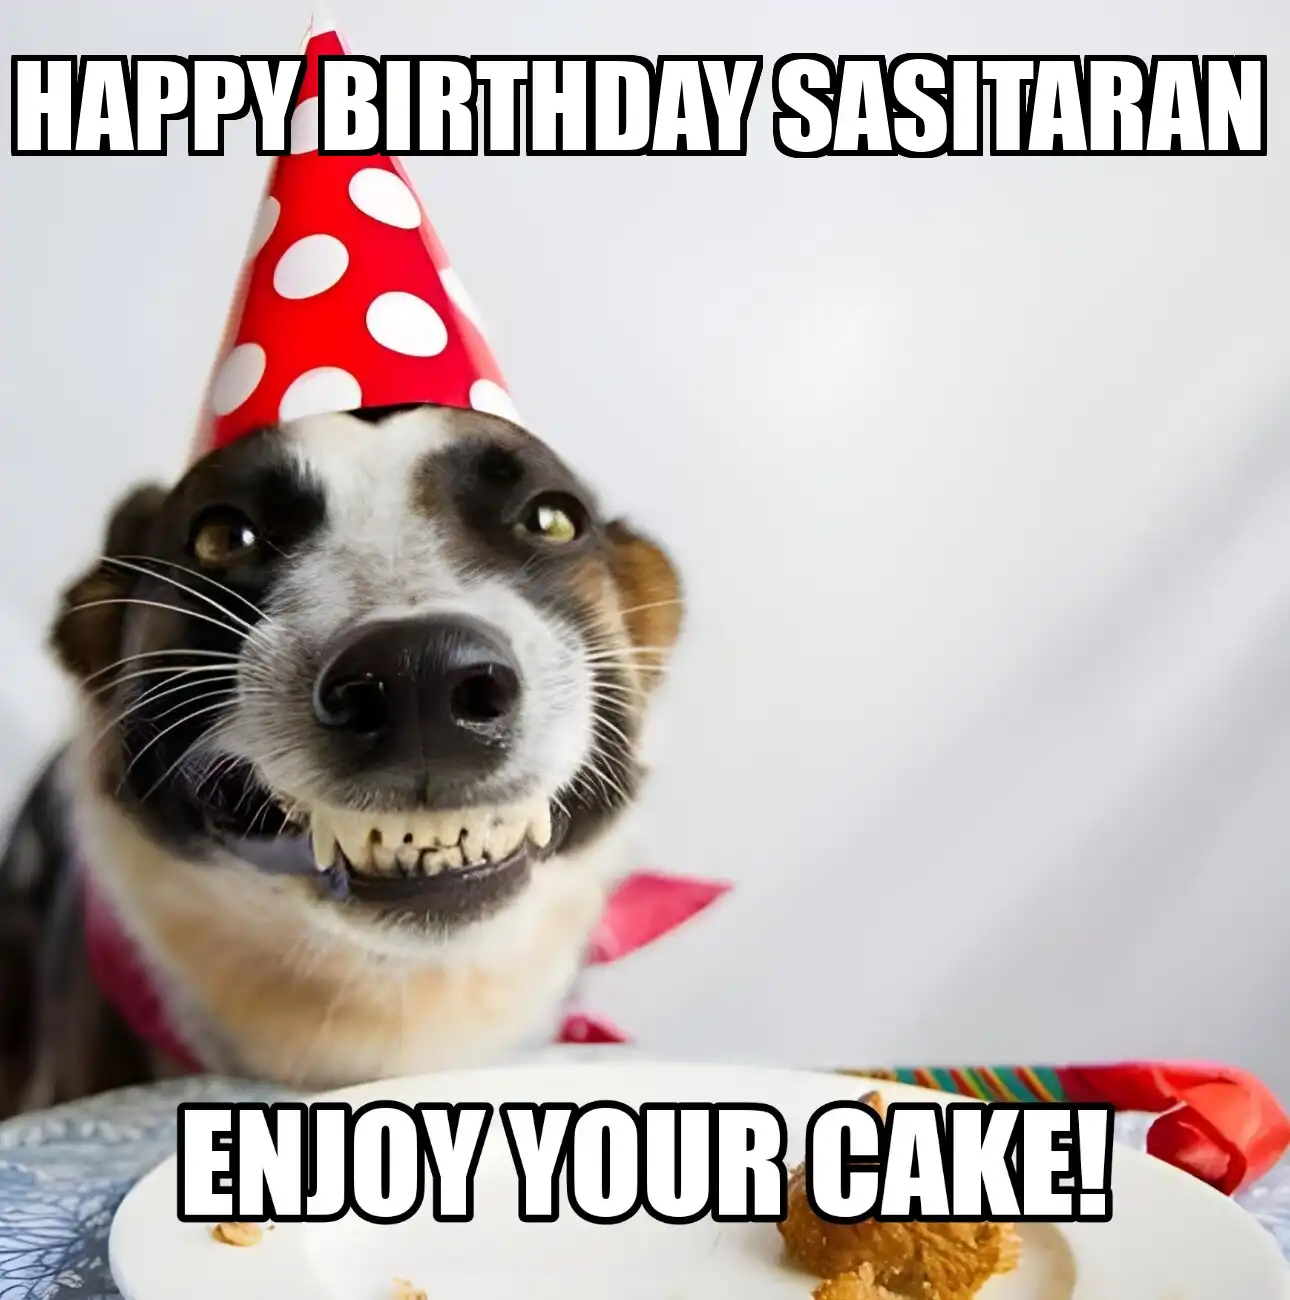 Happy Birthday Sasitaran Enjoy Your Cake Dog Meme